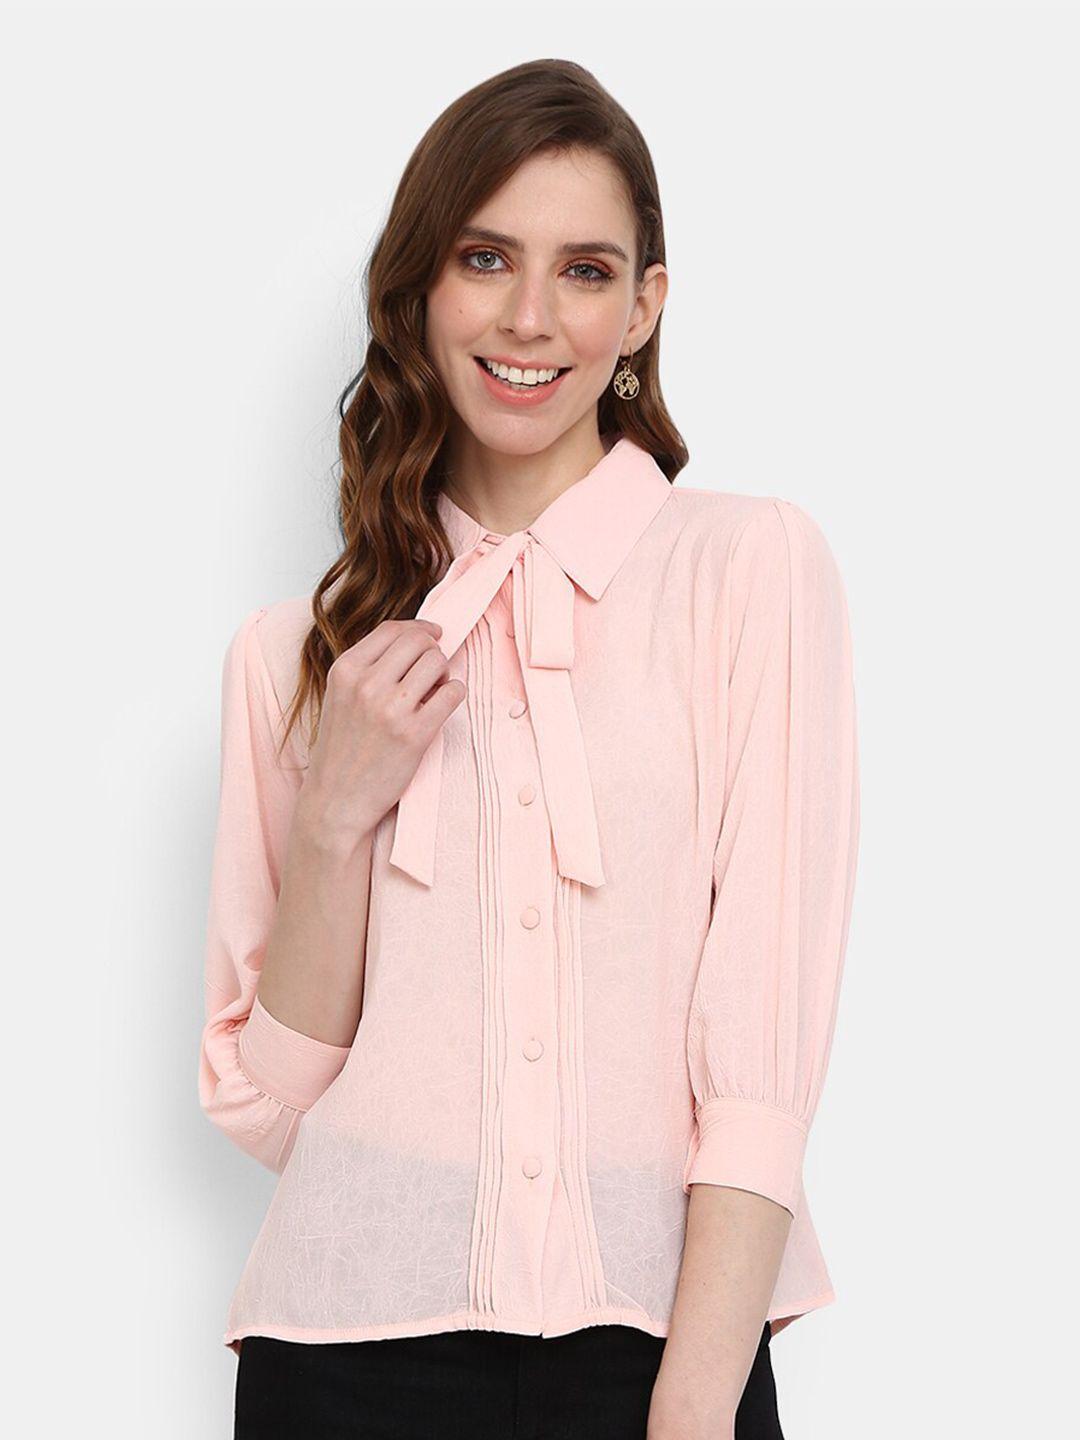 v-mart peach-coloured pure cotton shirt style top